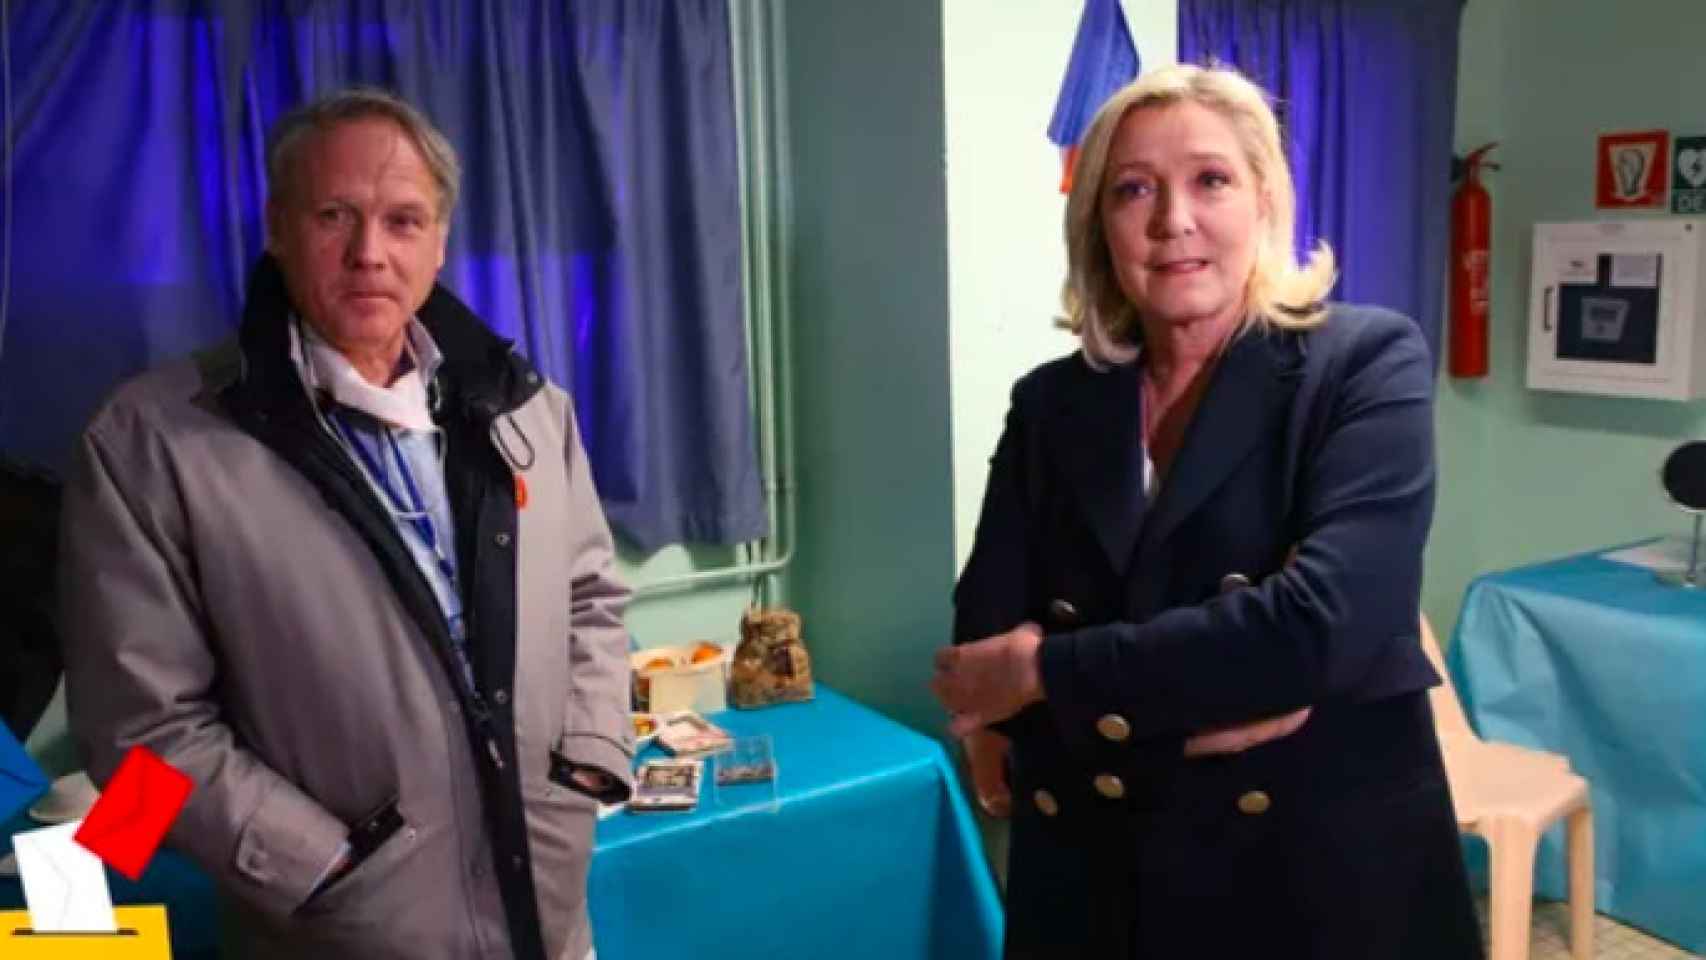 Philippe Olivier y Marine Le Pen.